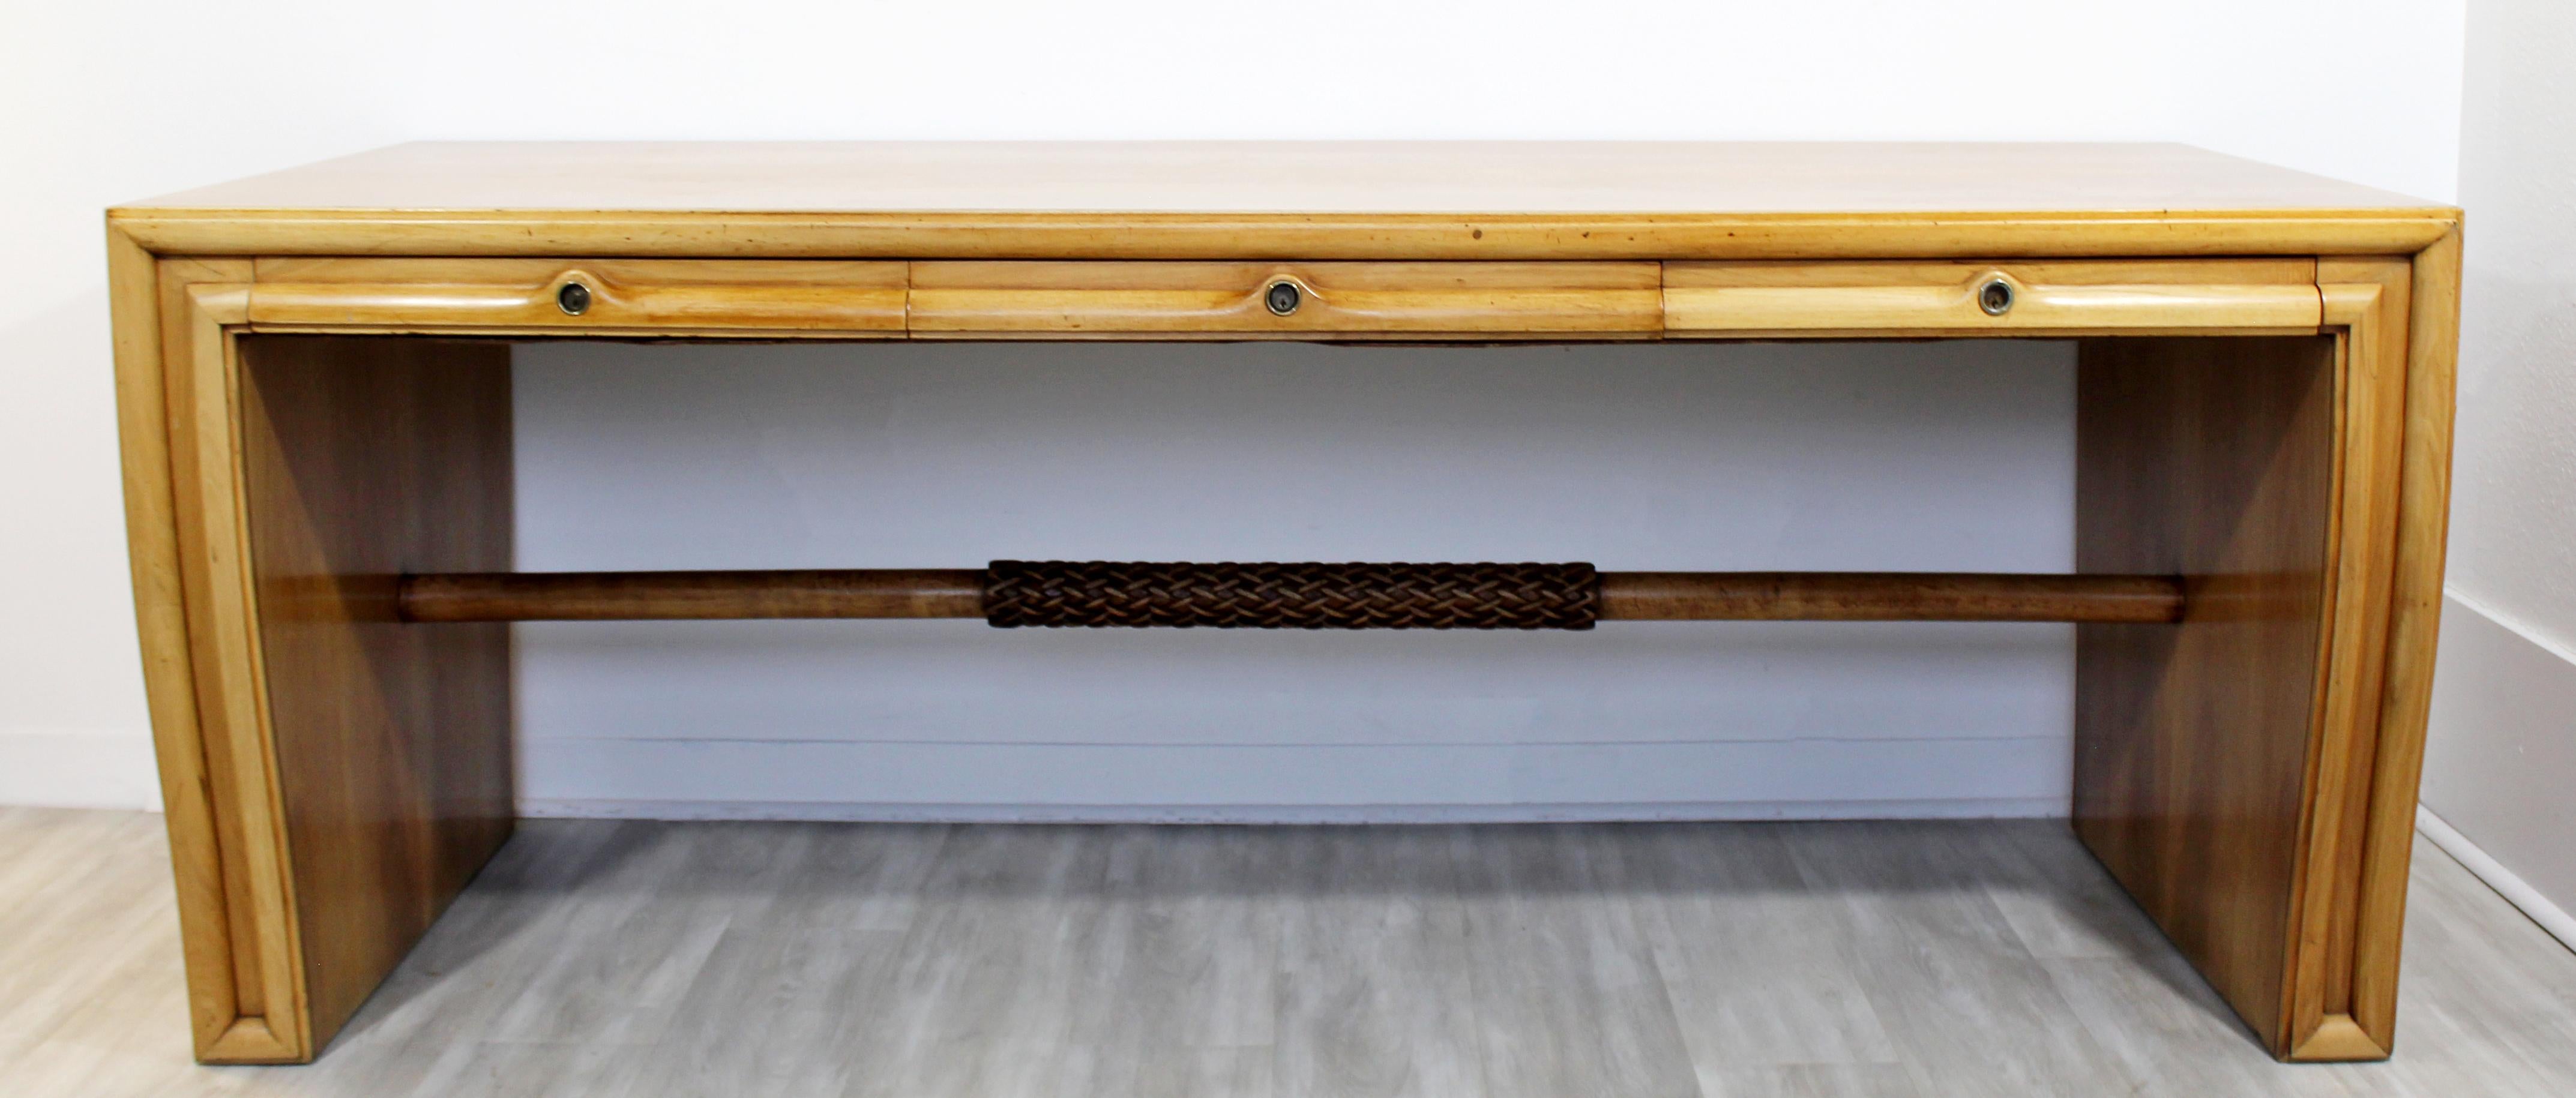 Arredamenti Osvaldo Borsani Varedo Atelier table desk with 3 drawers in a beautiful walnut wood. 1930s Art Deco. In very good condition. The dimensions are 79